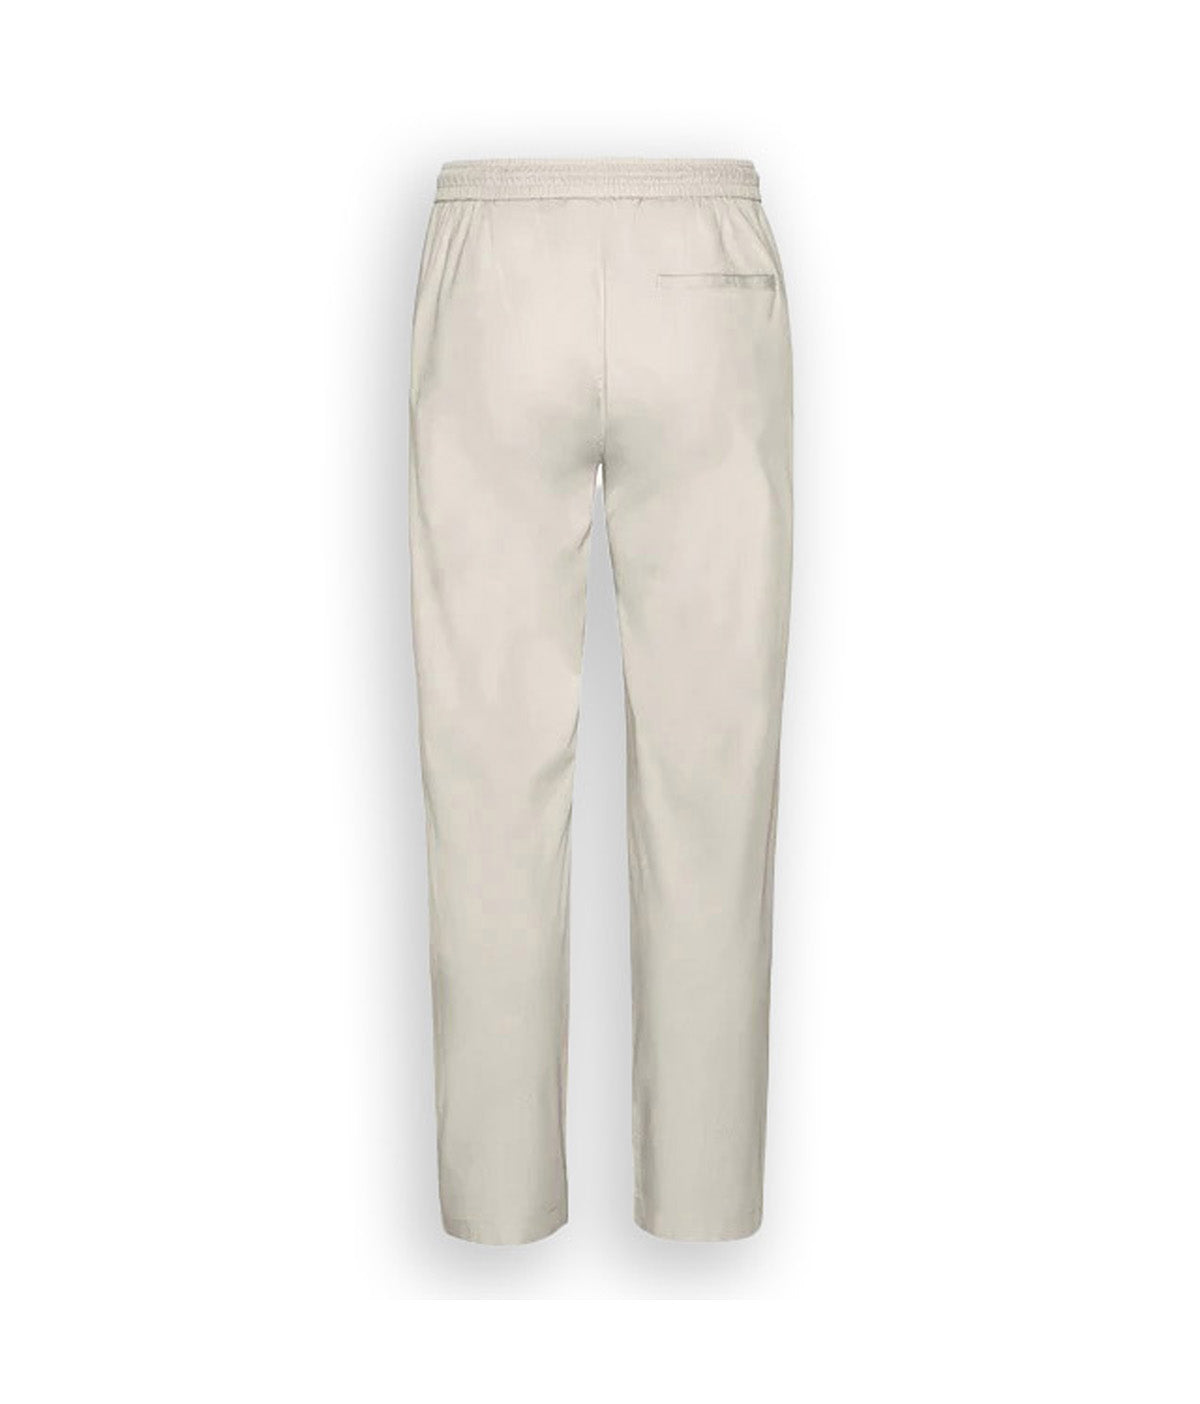 Pantaloni Colorful Standard Cotone Organico Elastico Bianco Sporco Unisex